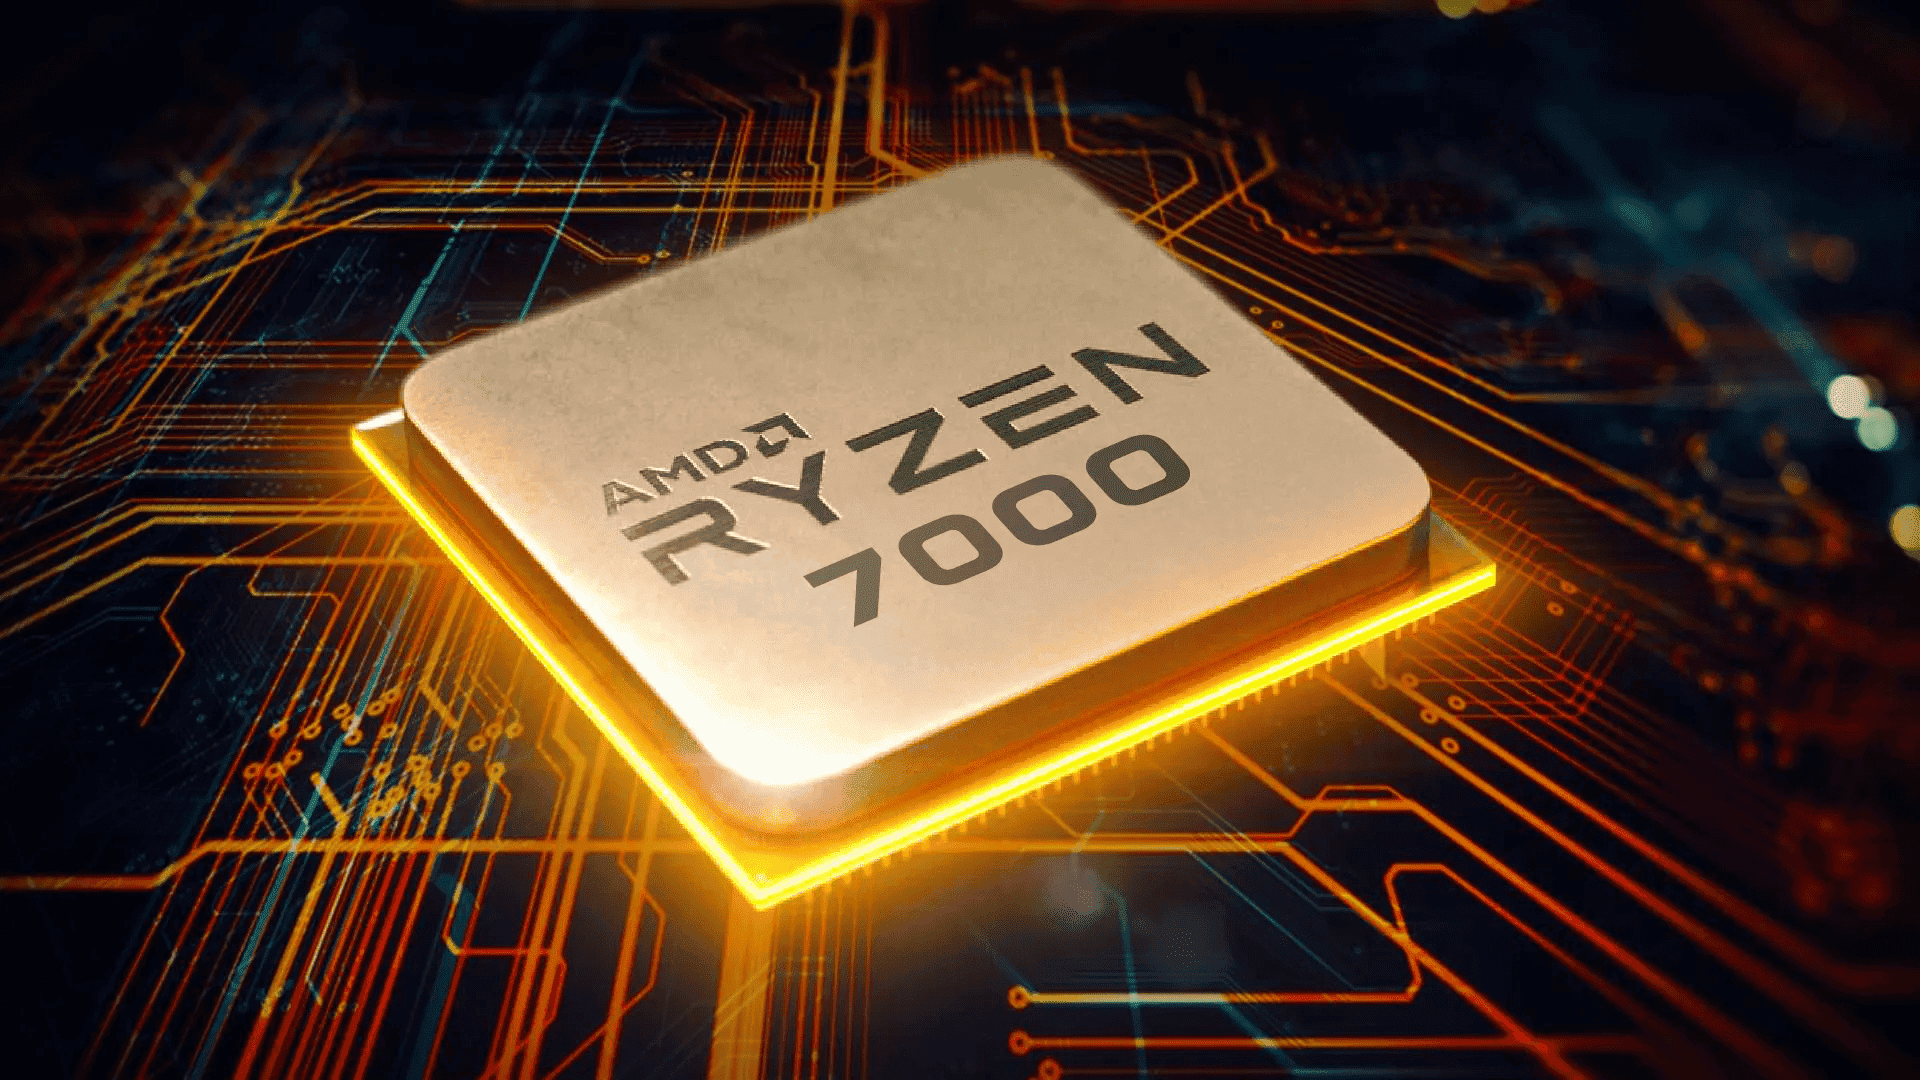 AM5 socket and Ryzen 7000 shown. Zen 4 capable of 5 GHz all-core 